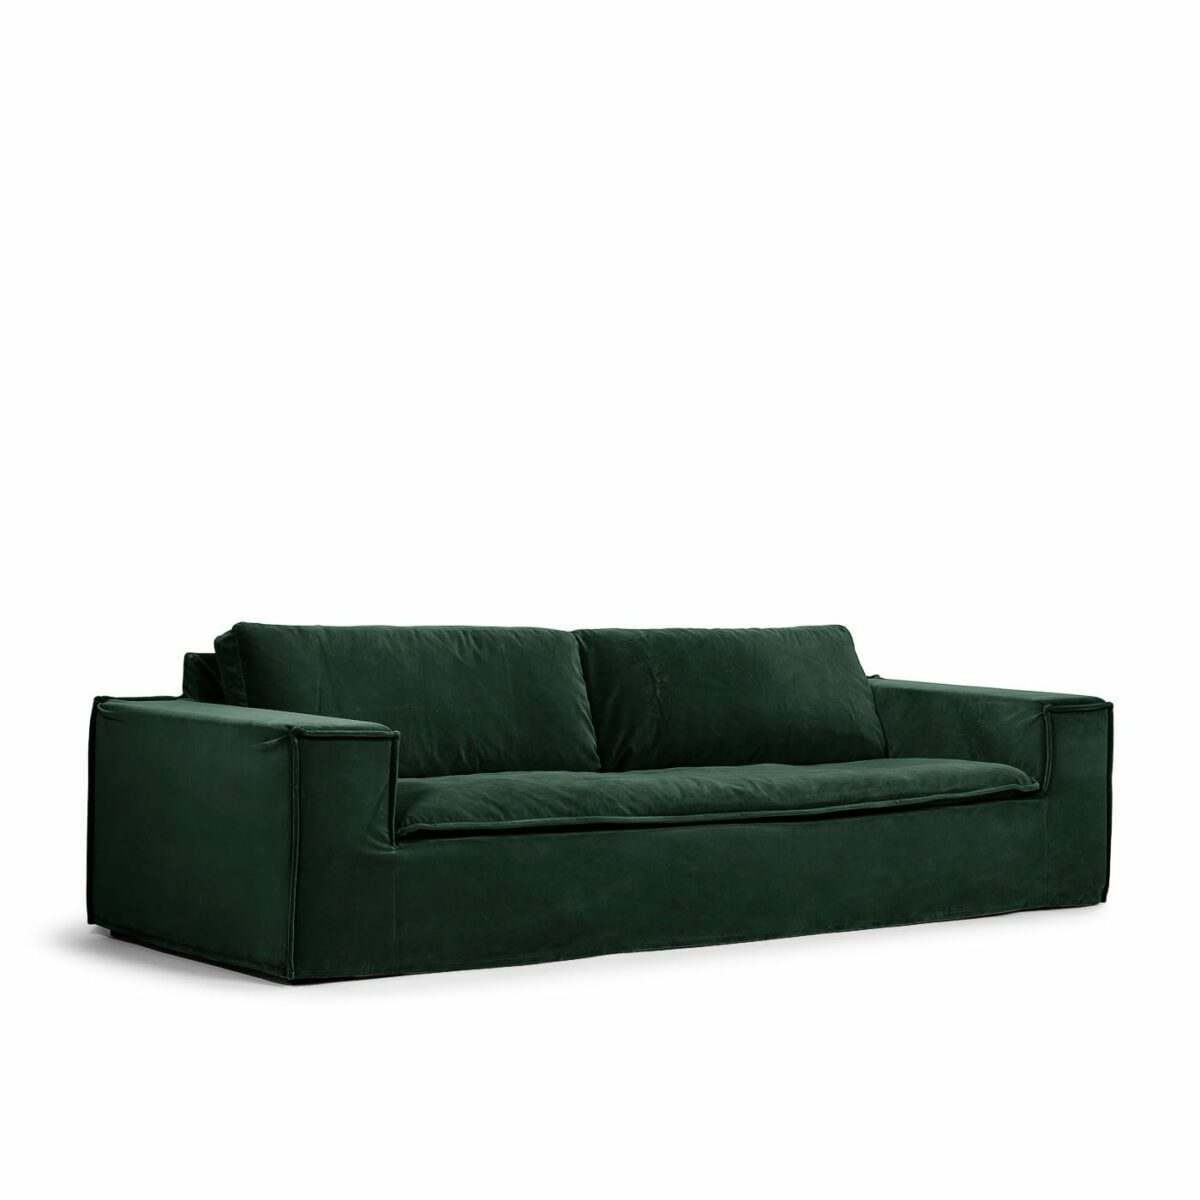 Luca Original 3-Seat Sofa Emerald Green